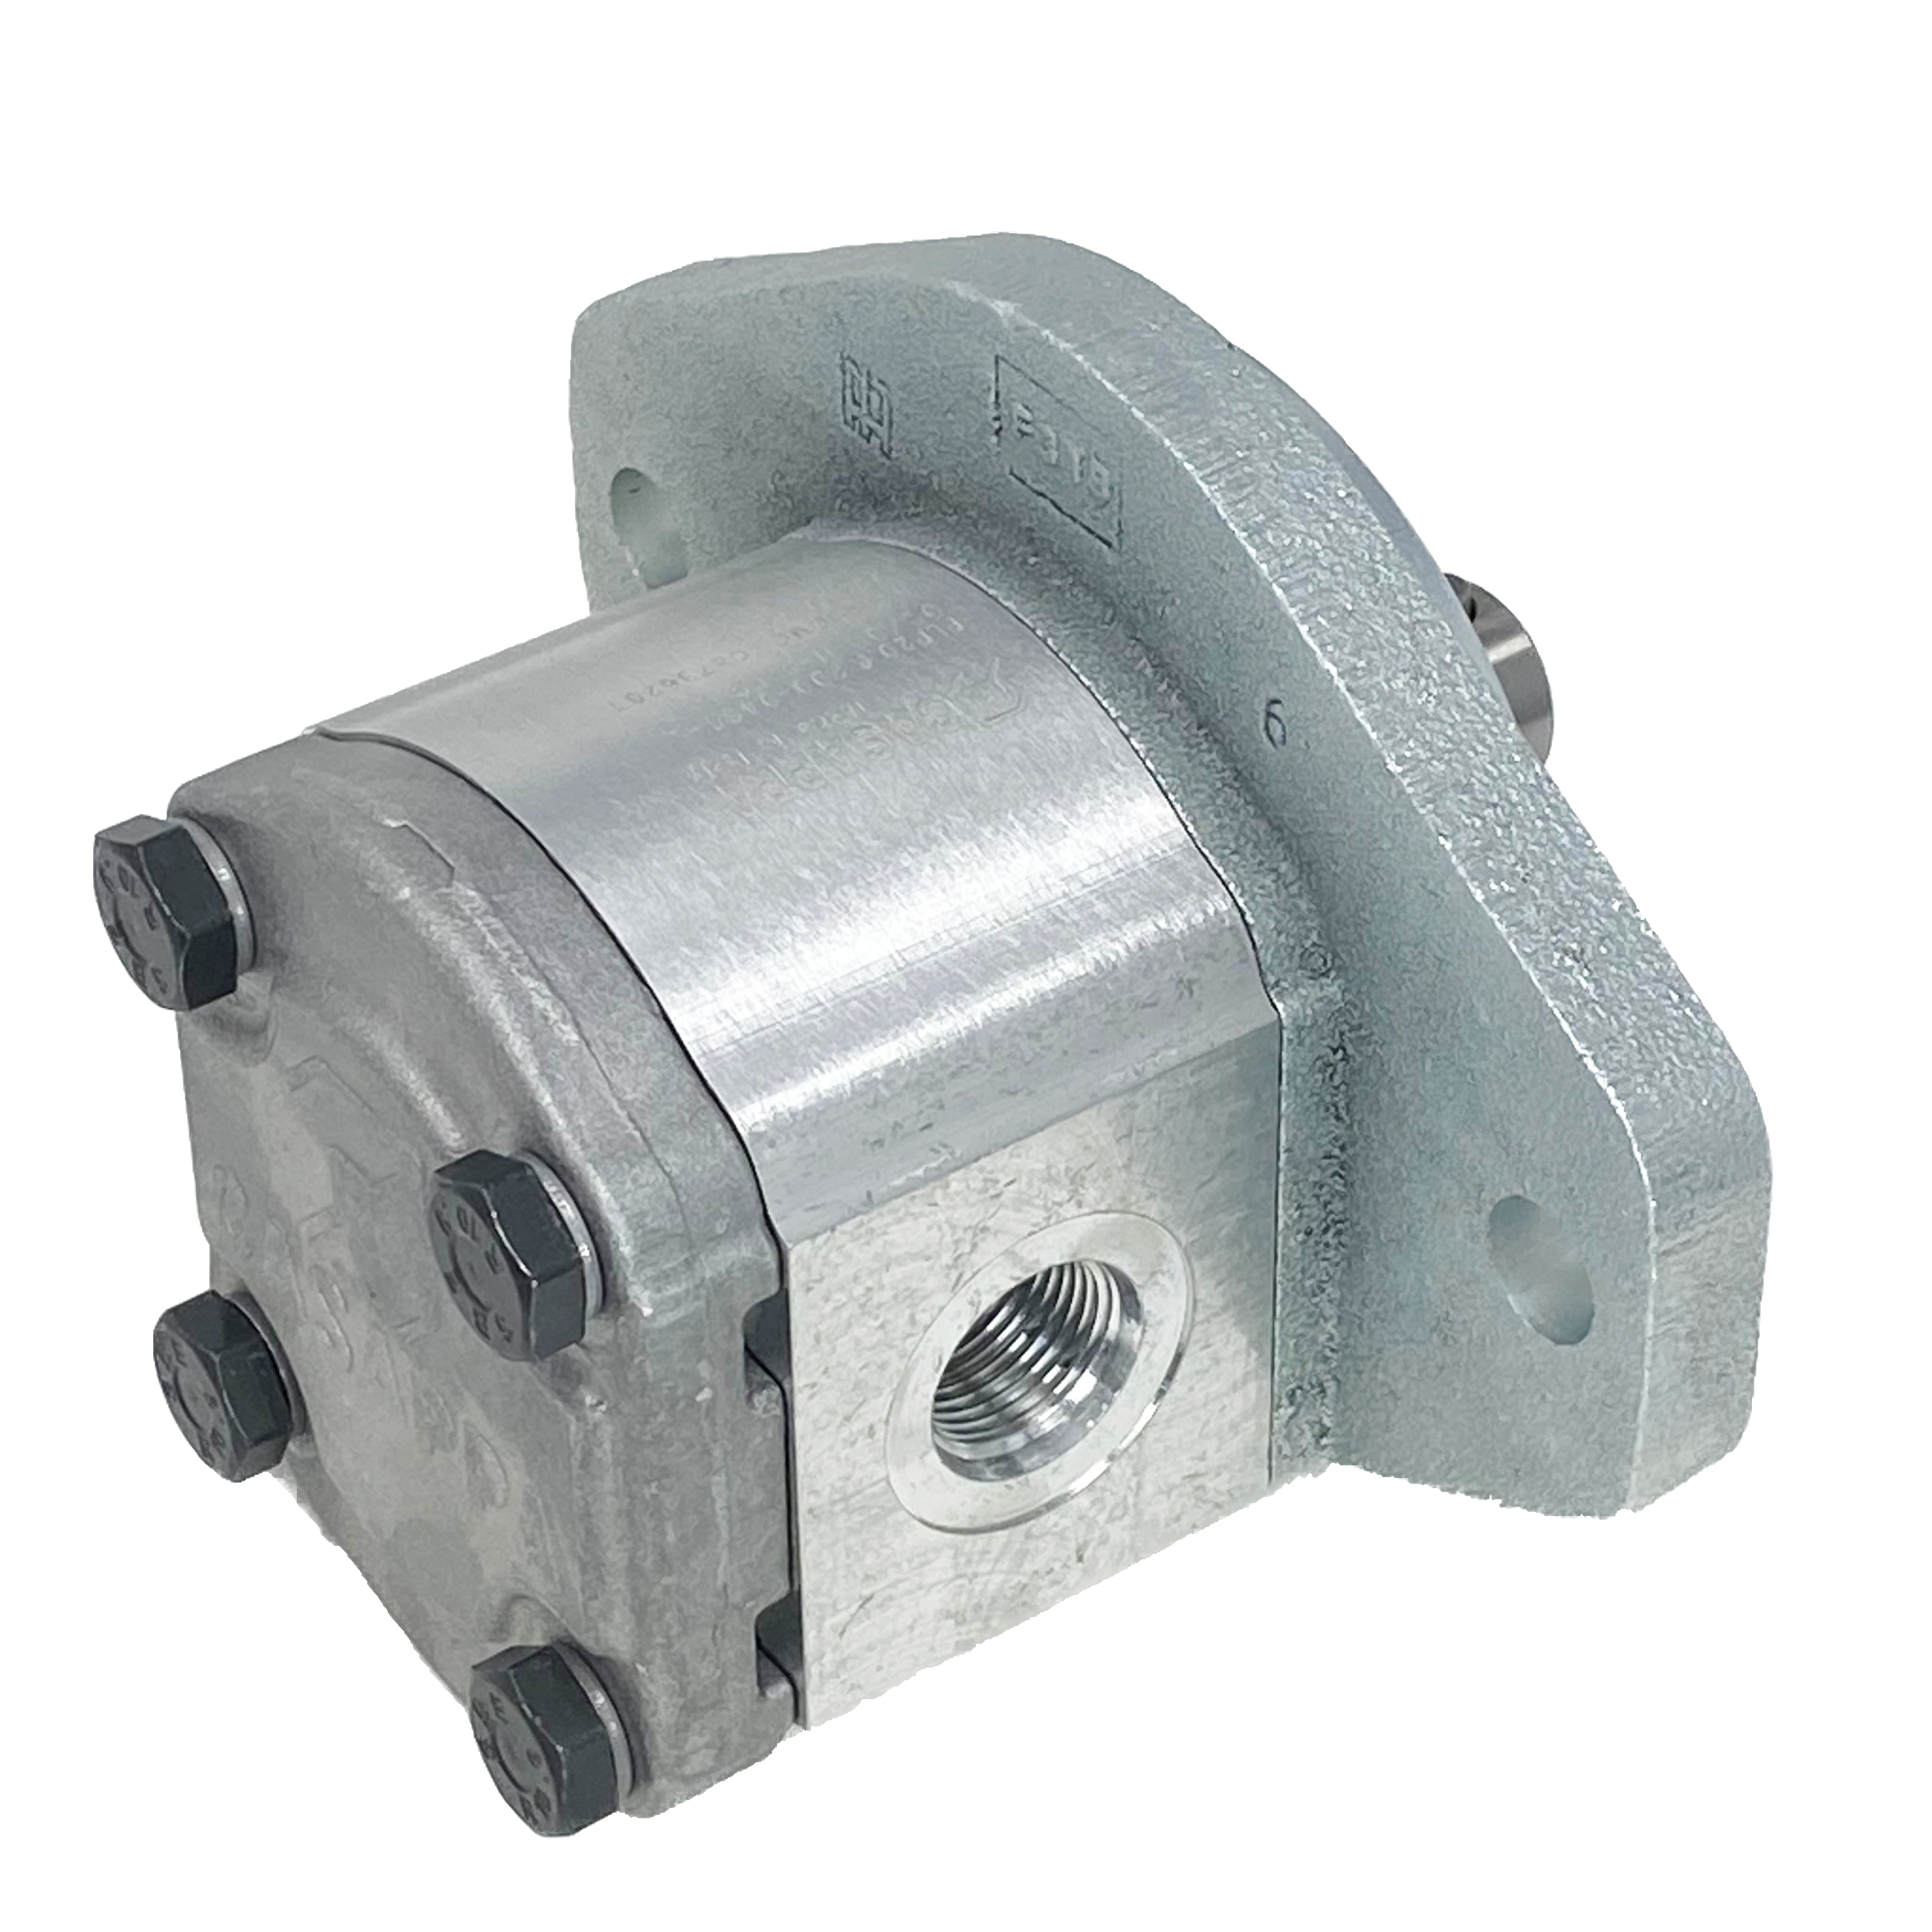 PLM20.14B0-31S1-LOC/OD-N-EL : Casappa Polaris Gear Motor, 14.53cc, 3625psi Rated, 3500RPM, Reversible Interior Drain, 5/8" Bore x 5/32" Key Shaft, SAE A 2-Bolt Flange, 0.625 (5/8") #10 SAE Inlet, 0.75 (3/4") #12 SAE Outlet, Aluminum Body & Flange